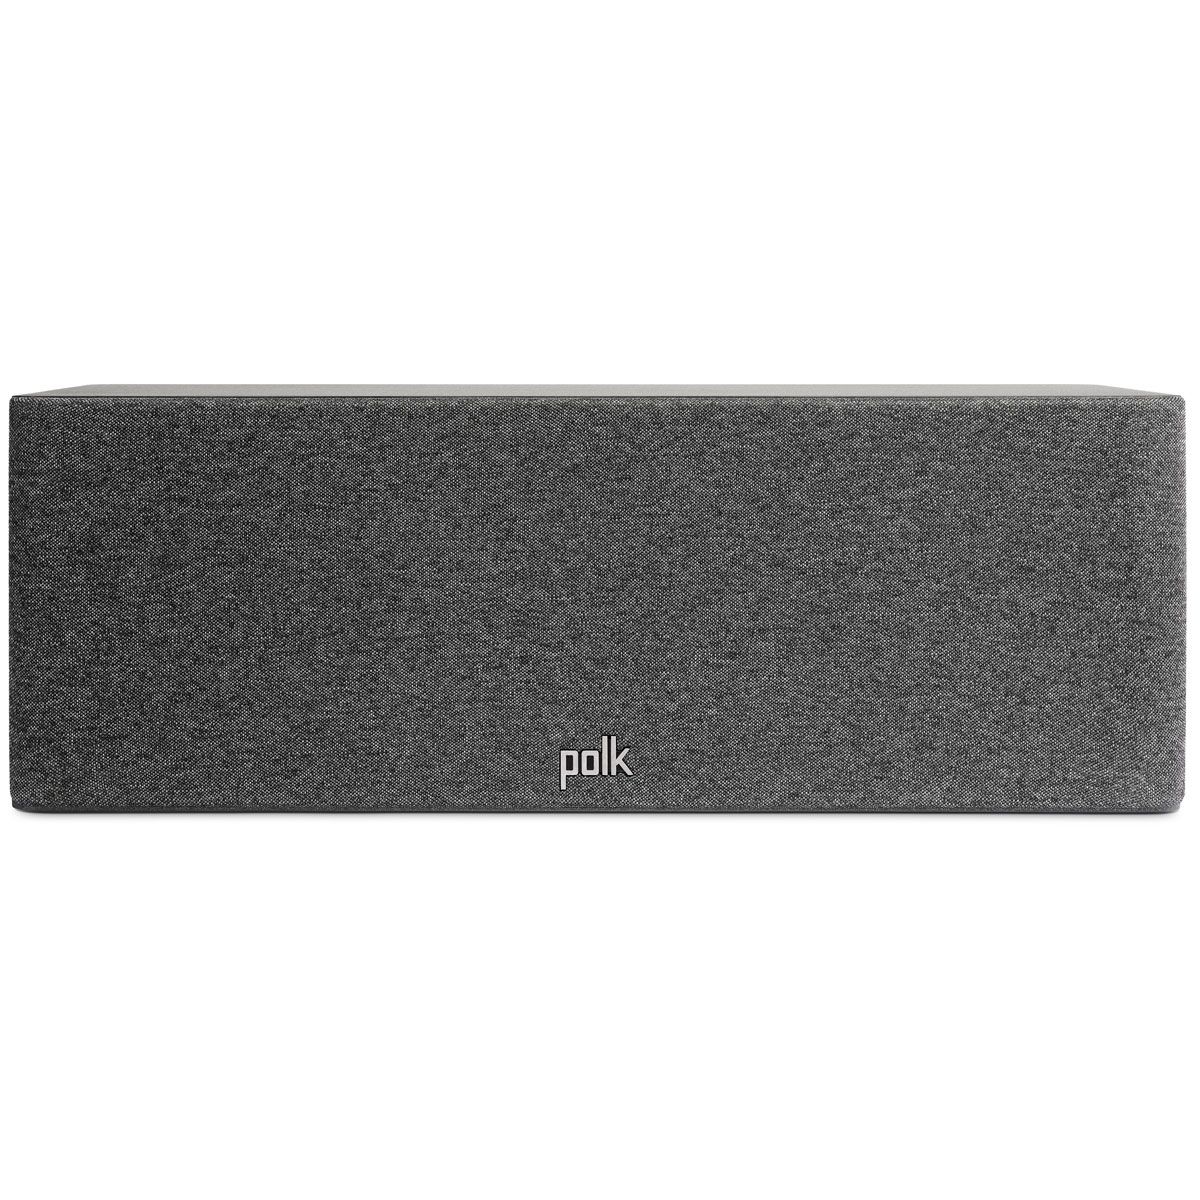 Polk Reserve R300 Center Channel Speaker, Black, front with grille